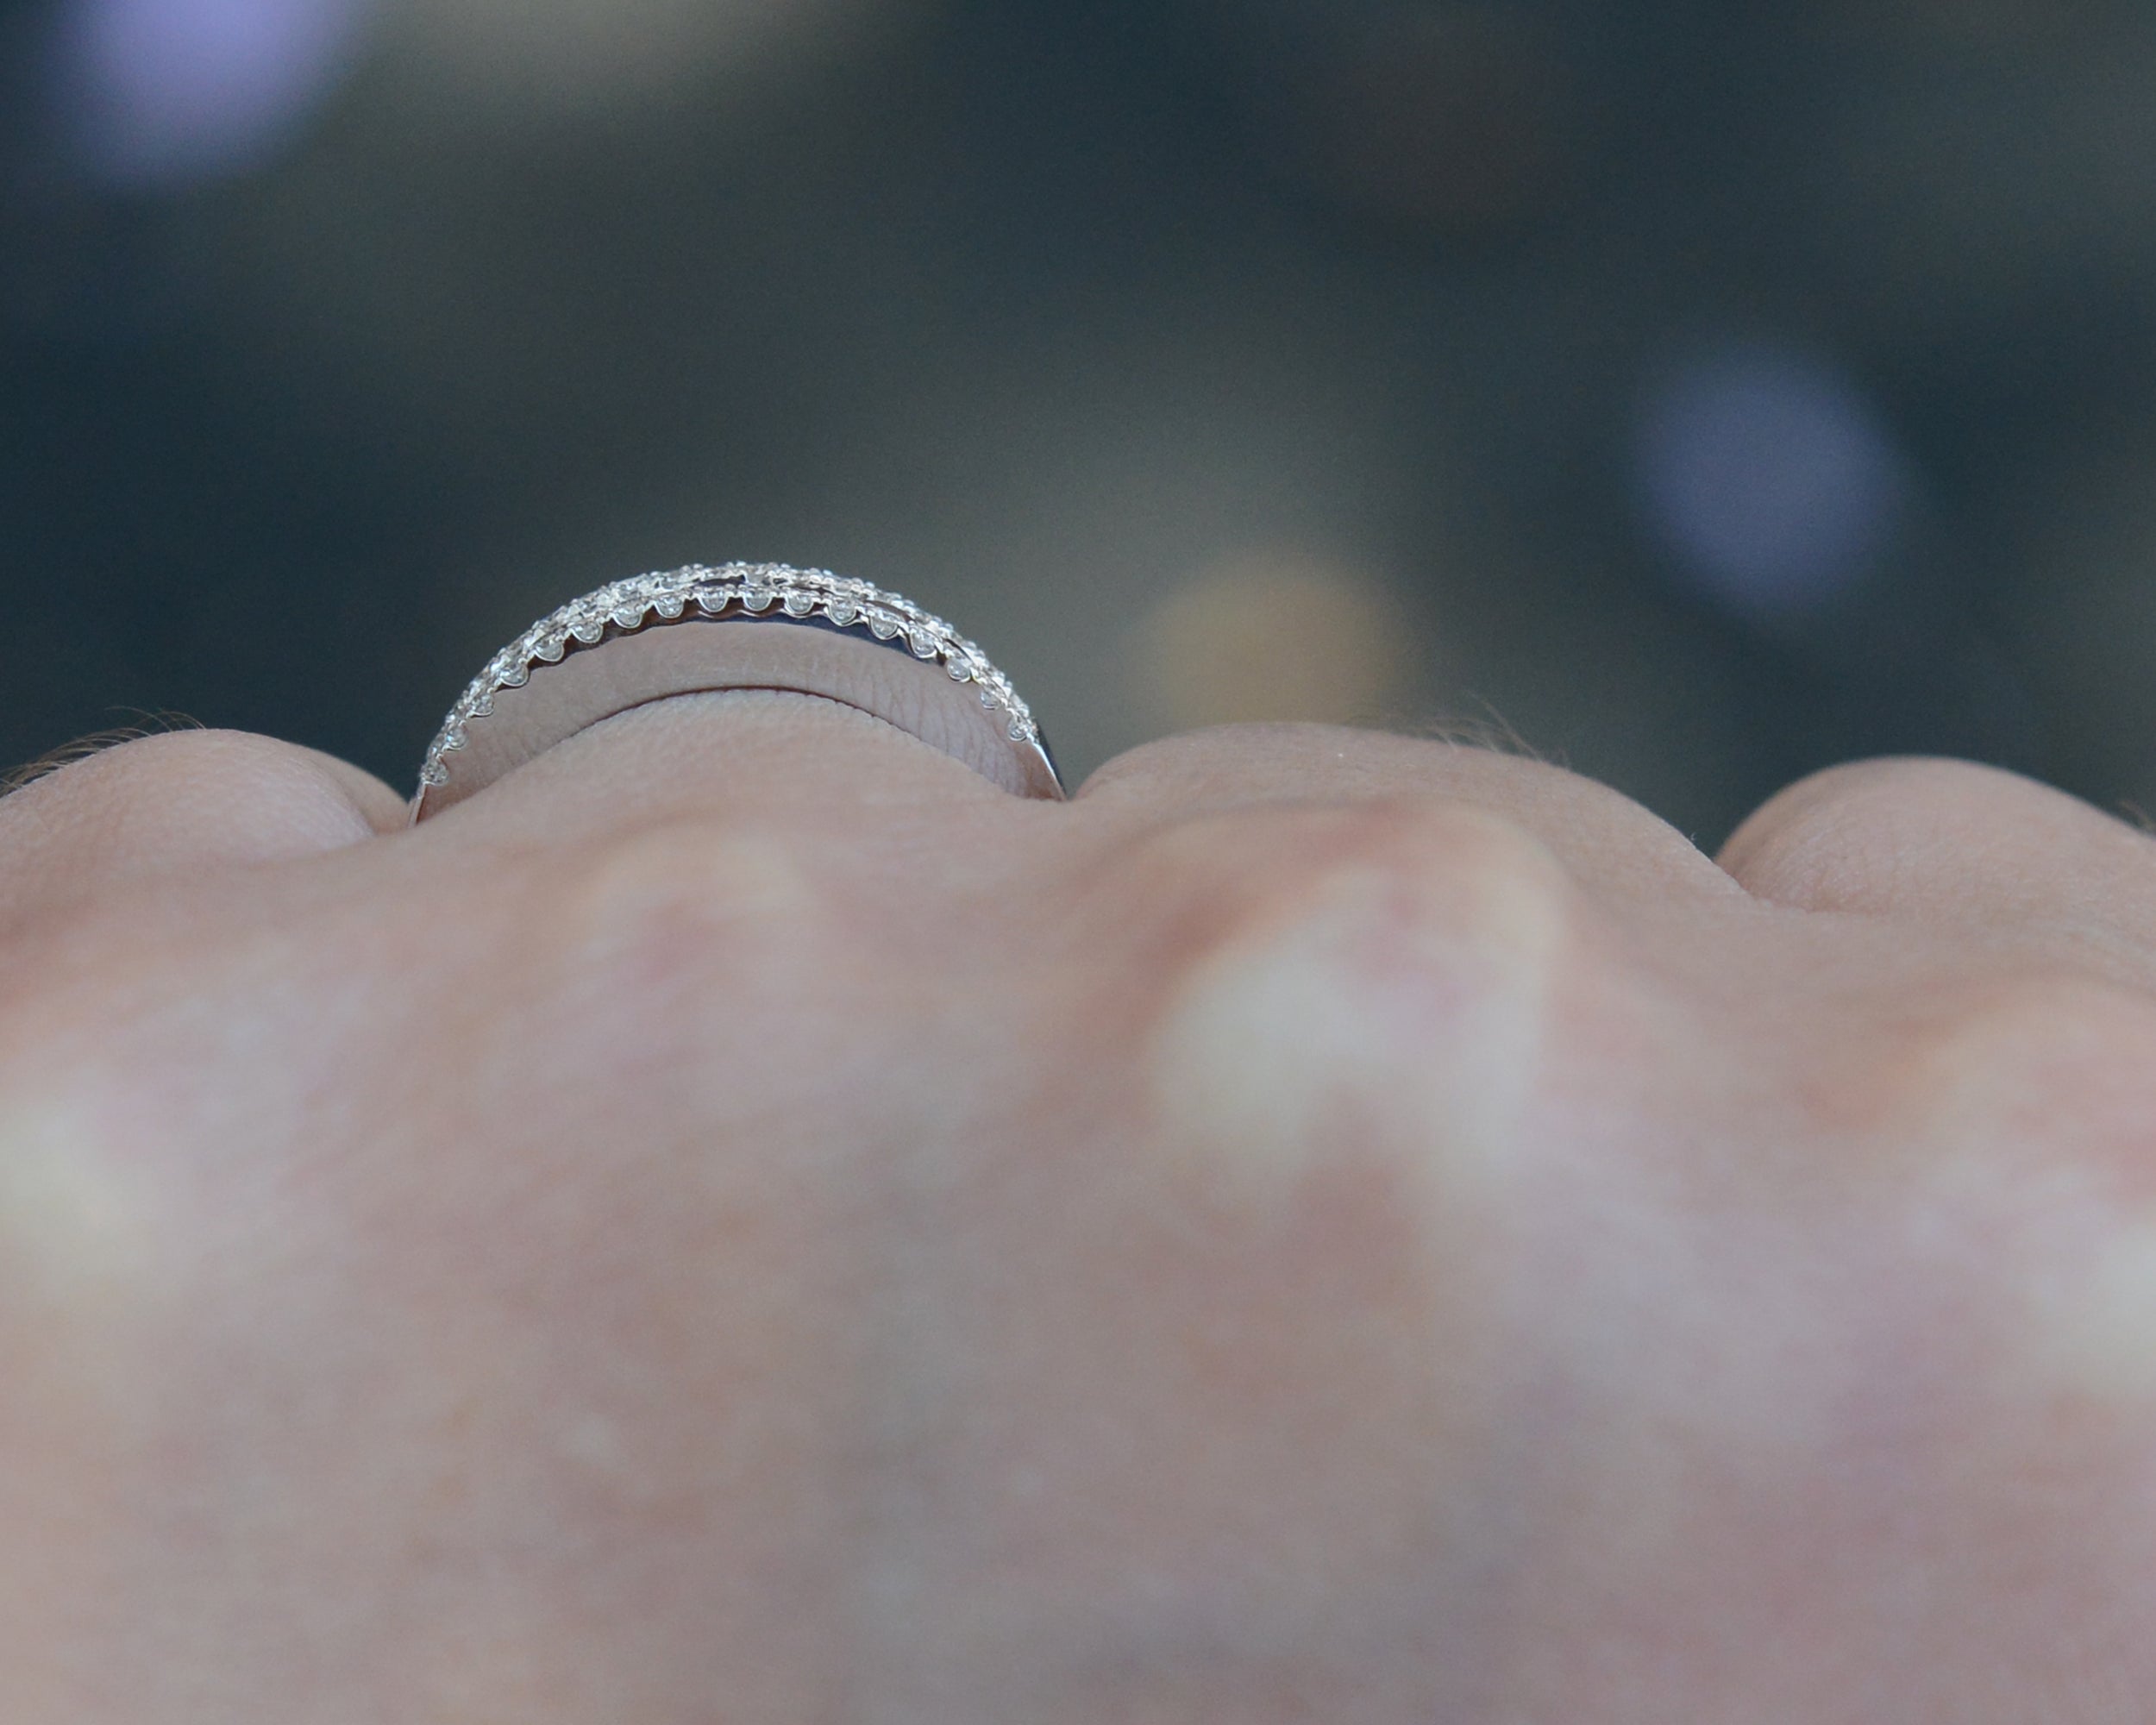 New Rainbow Sapphire & Diamond Wedding Band Engagement Ring